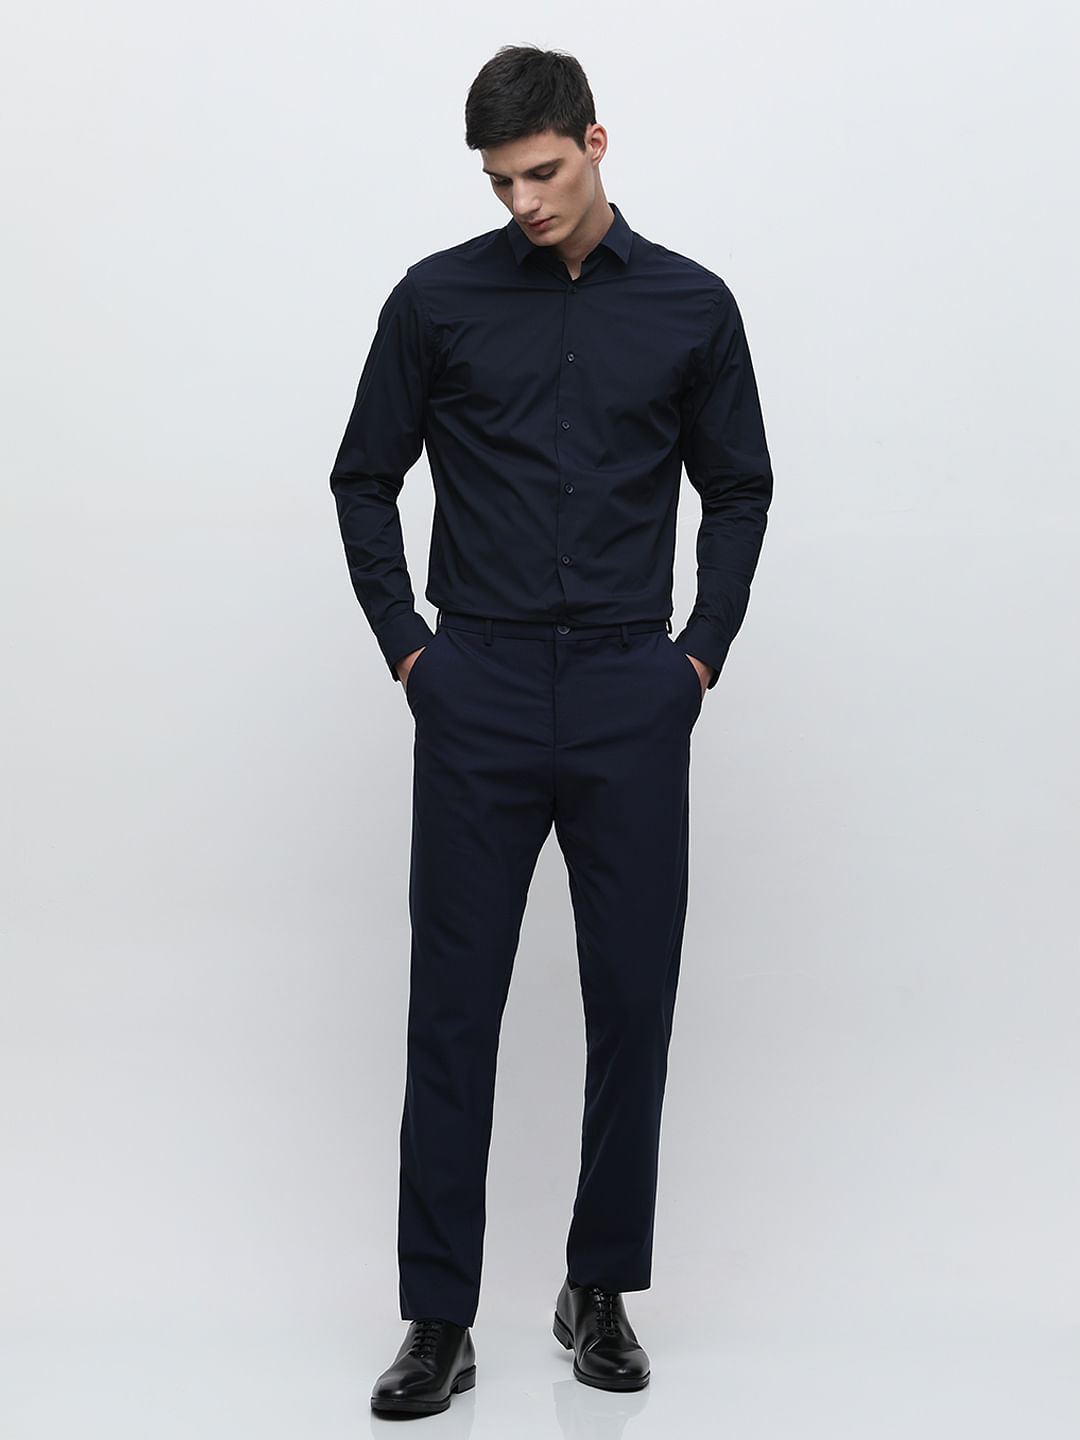 KCC Premium Long Sleeve Shirt Navy Blue | Kings Cross Clothing